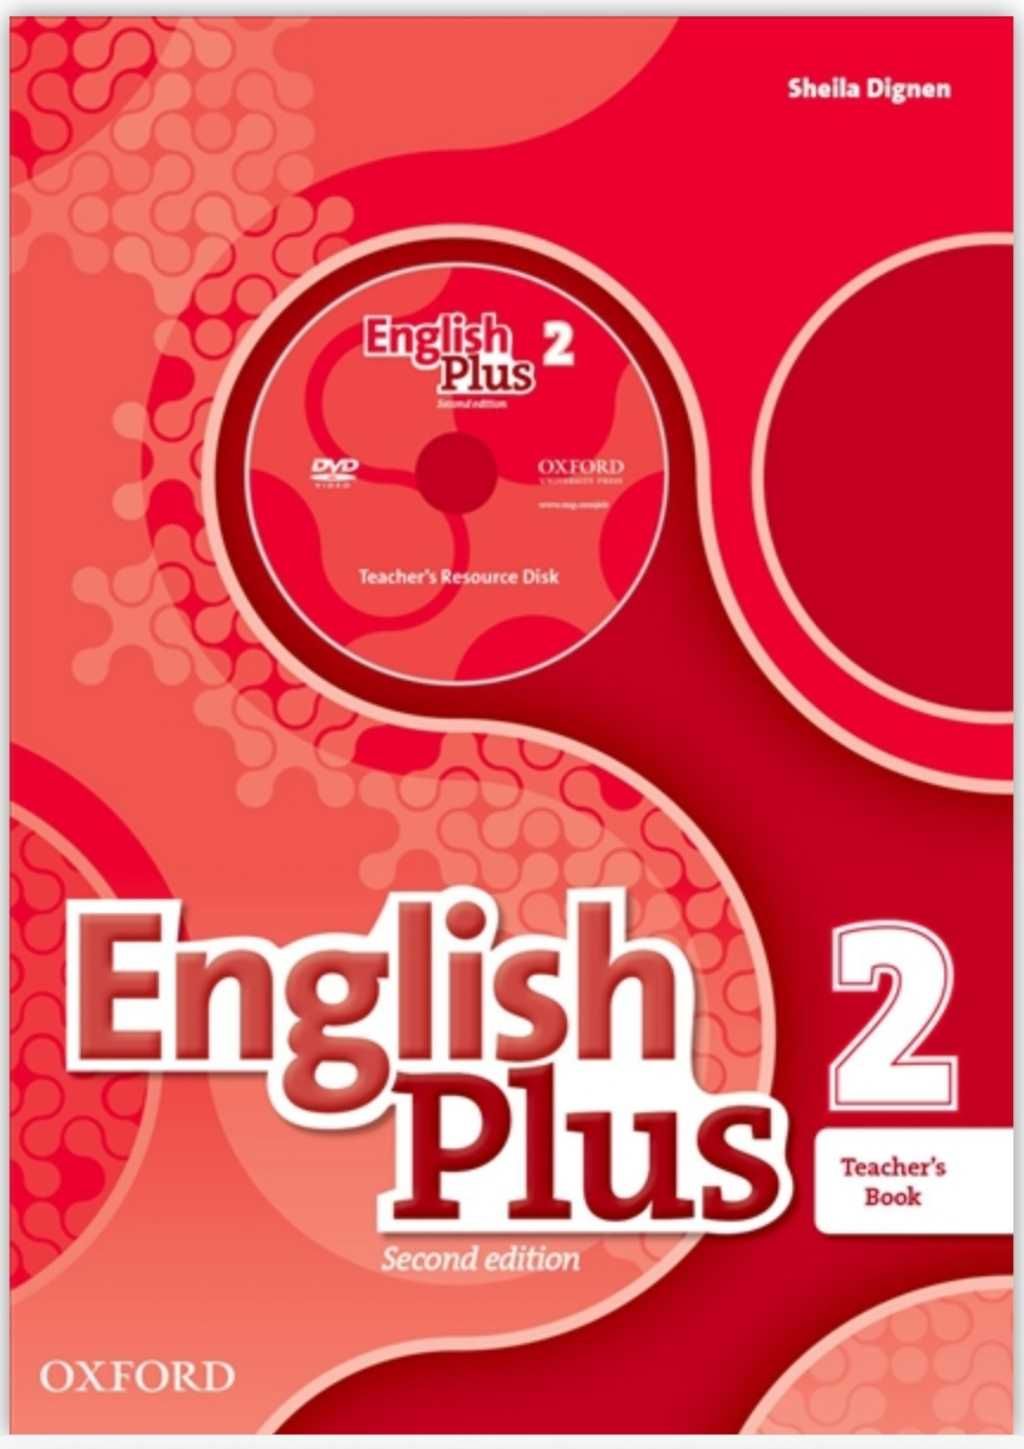 English Plus Second Edition 2 Teacher's Book